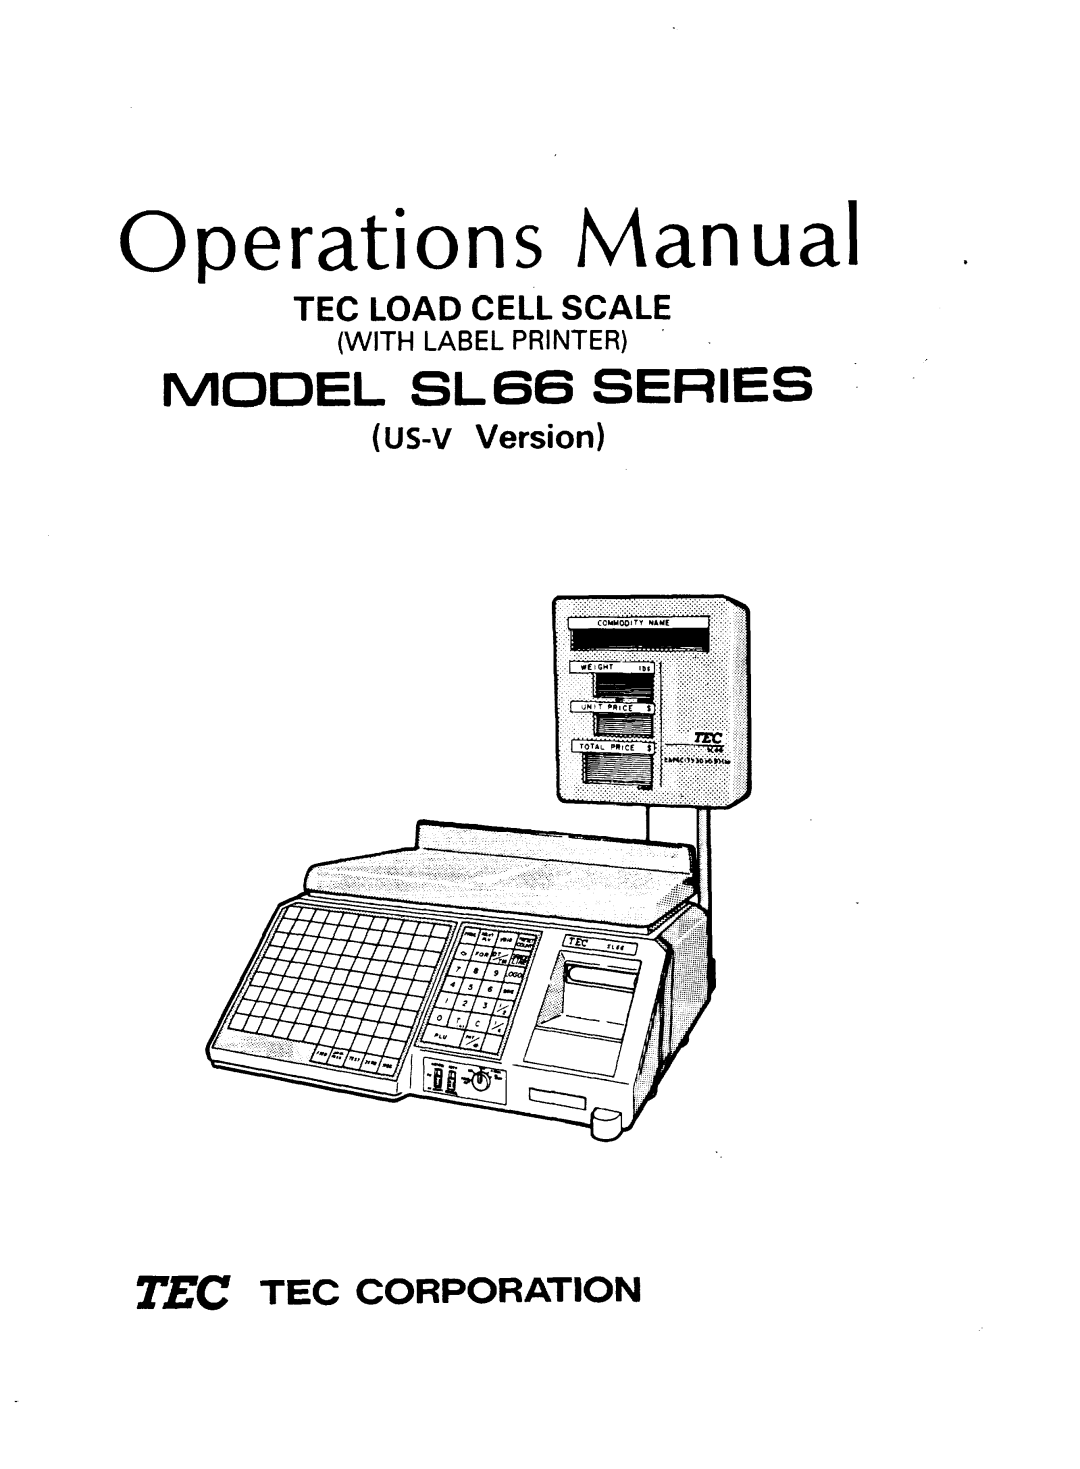 Toshiba EMl-31055 manual MODEL SL66 SERIES, r&c TEC CORPORATION, Tec Load Cell Scale, US-V Version, With Label Printer ’ 